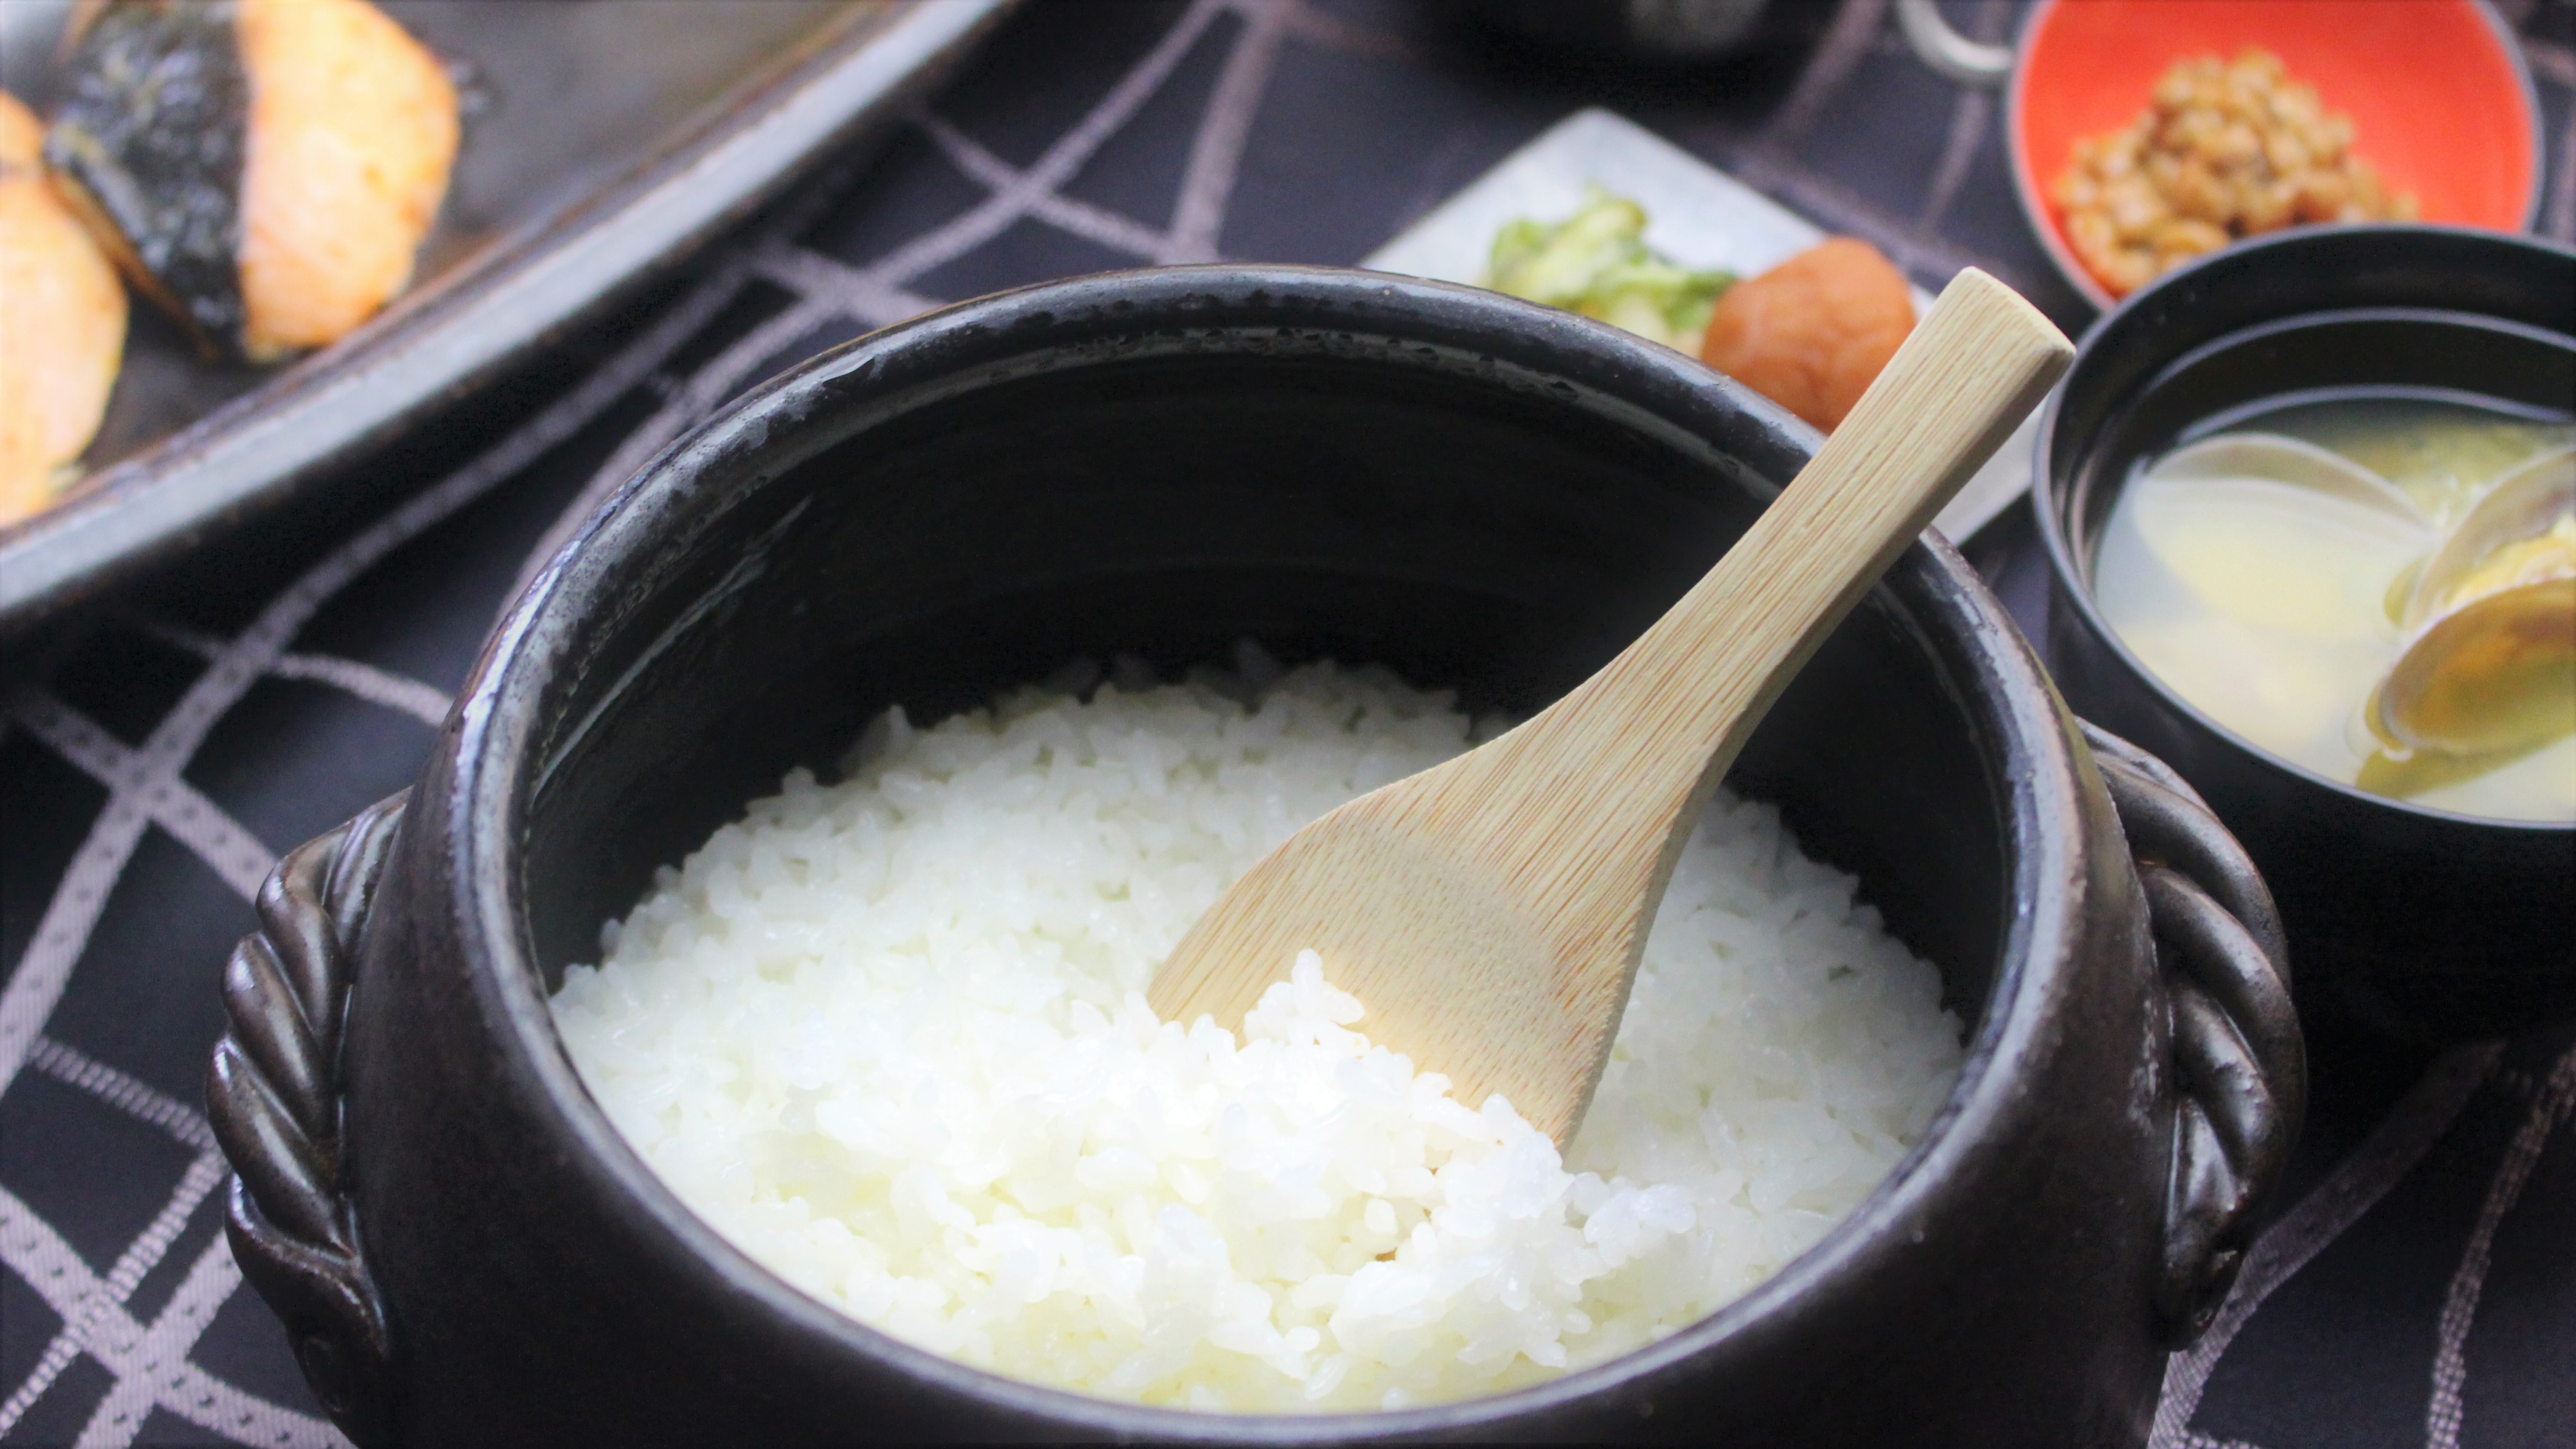 Breakfast is also freshly cooked Koshihikari